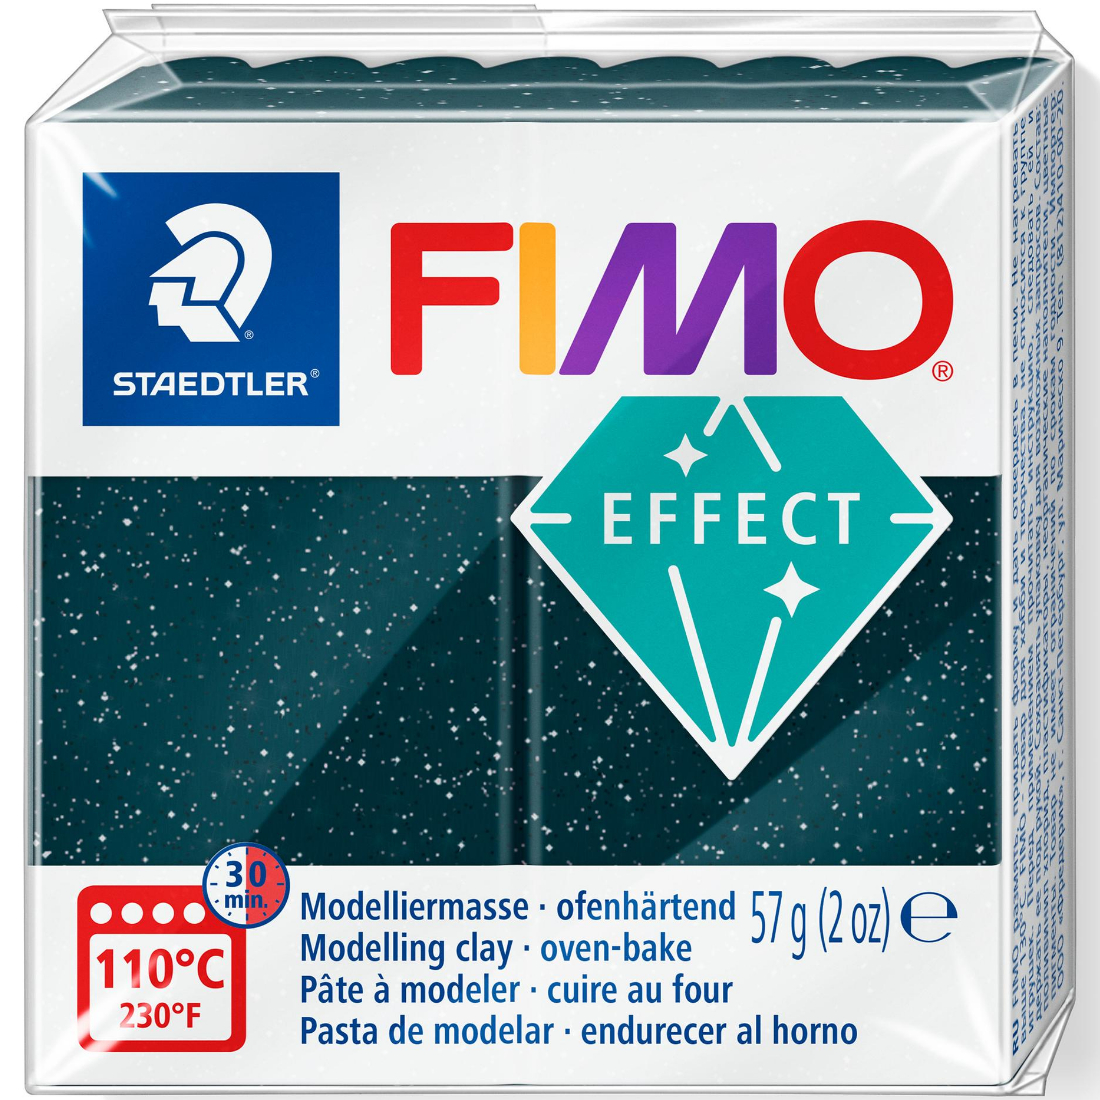 Pasta de Modelar FIMO Effect Star Dust 903 staedtler